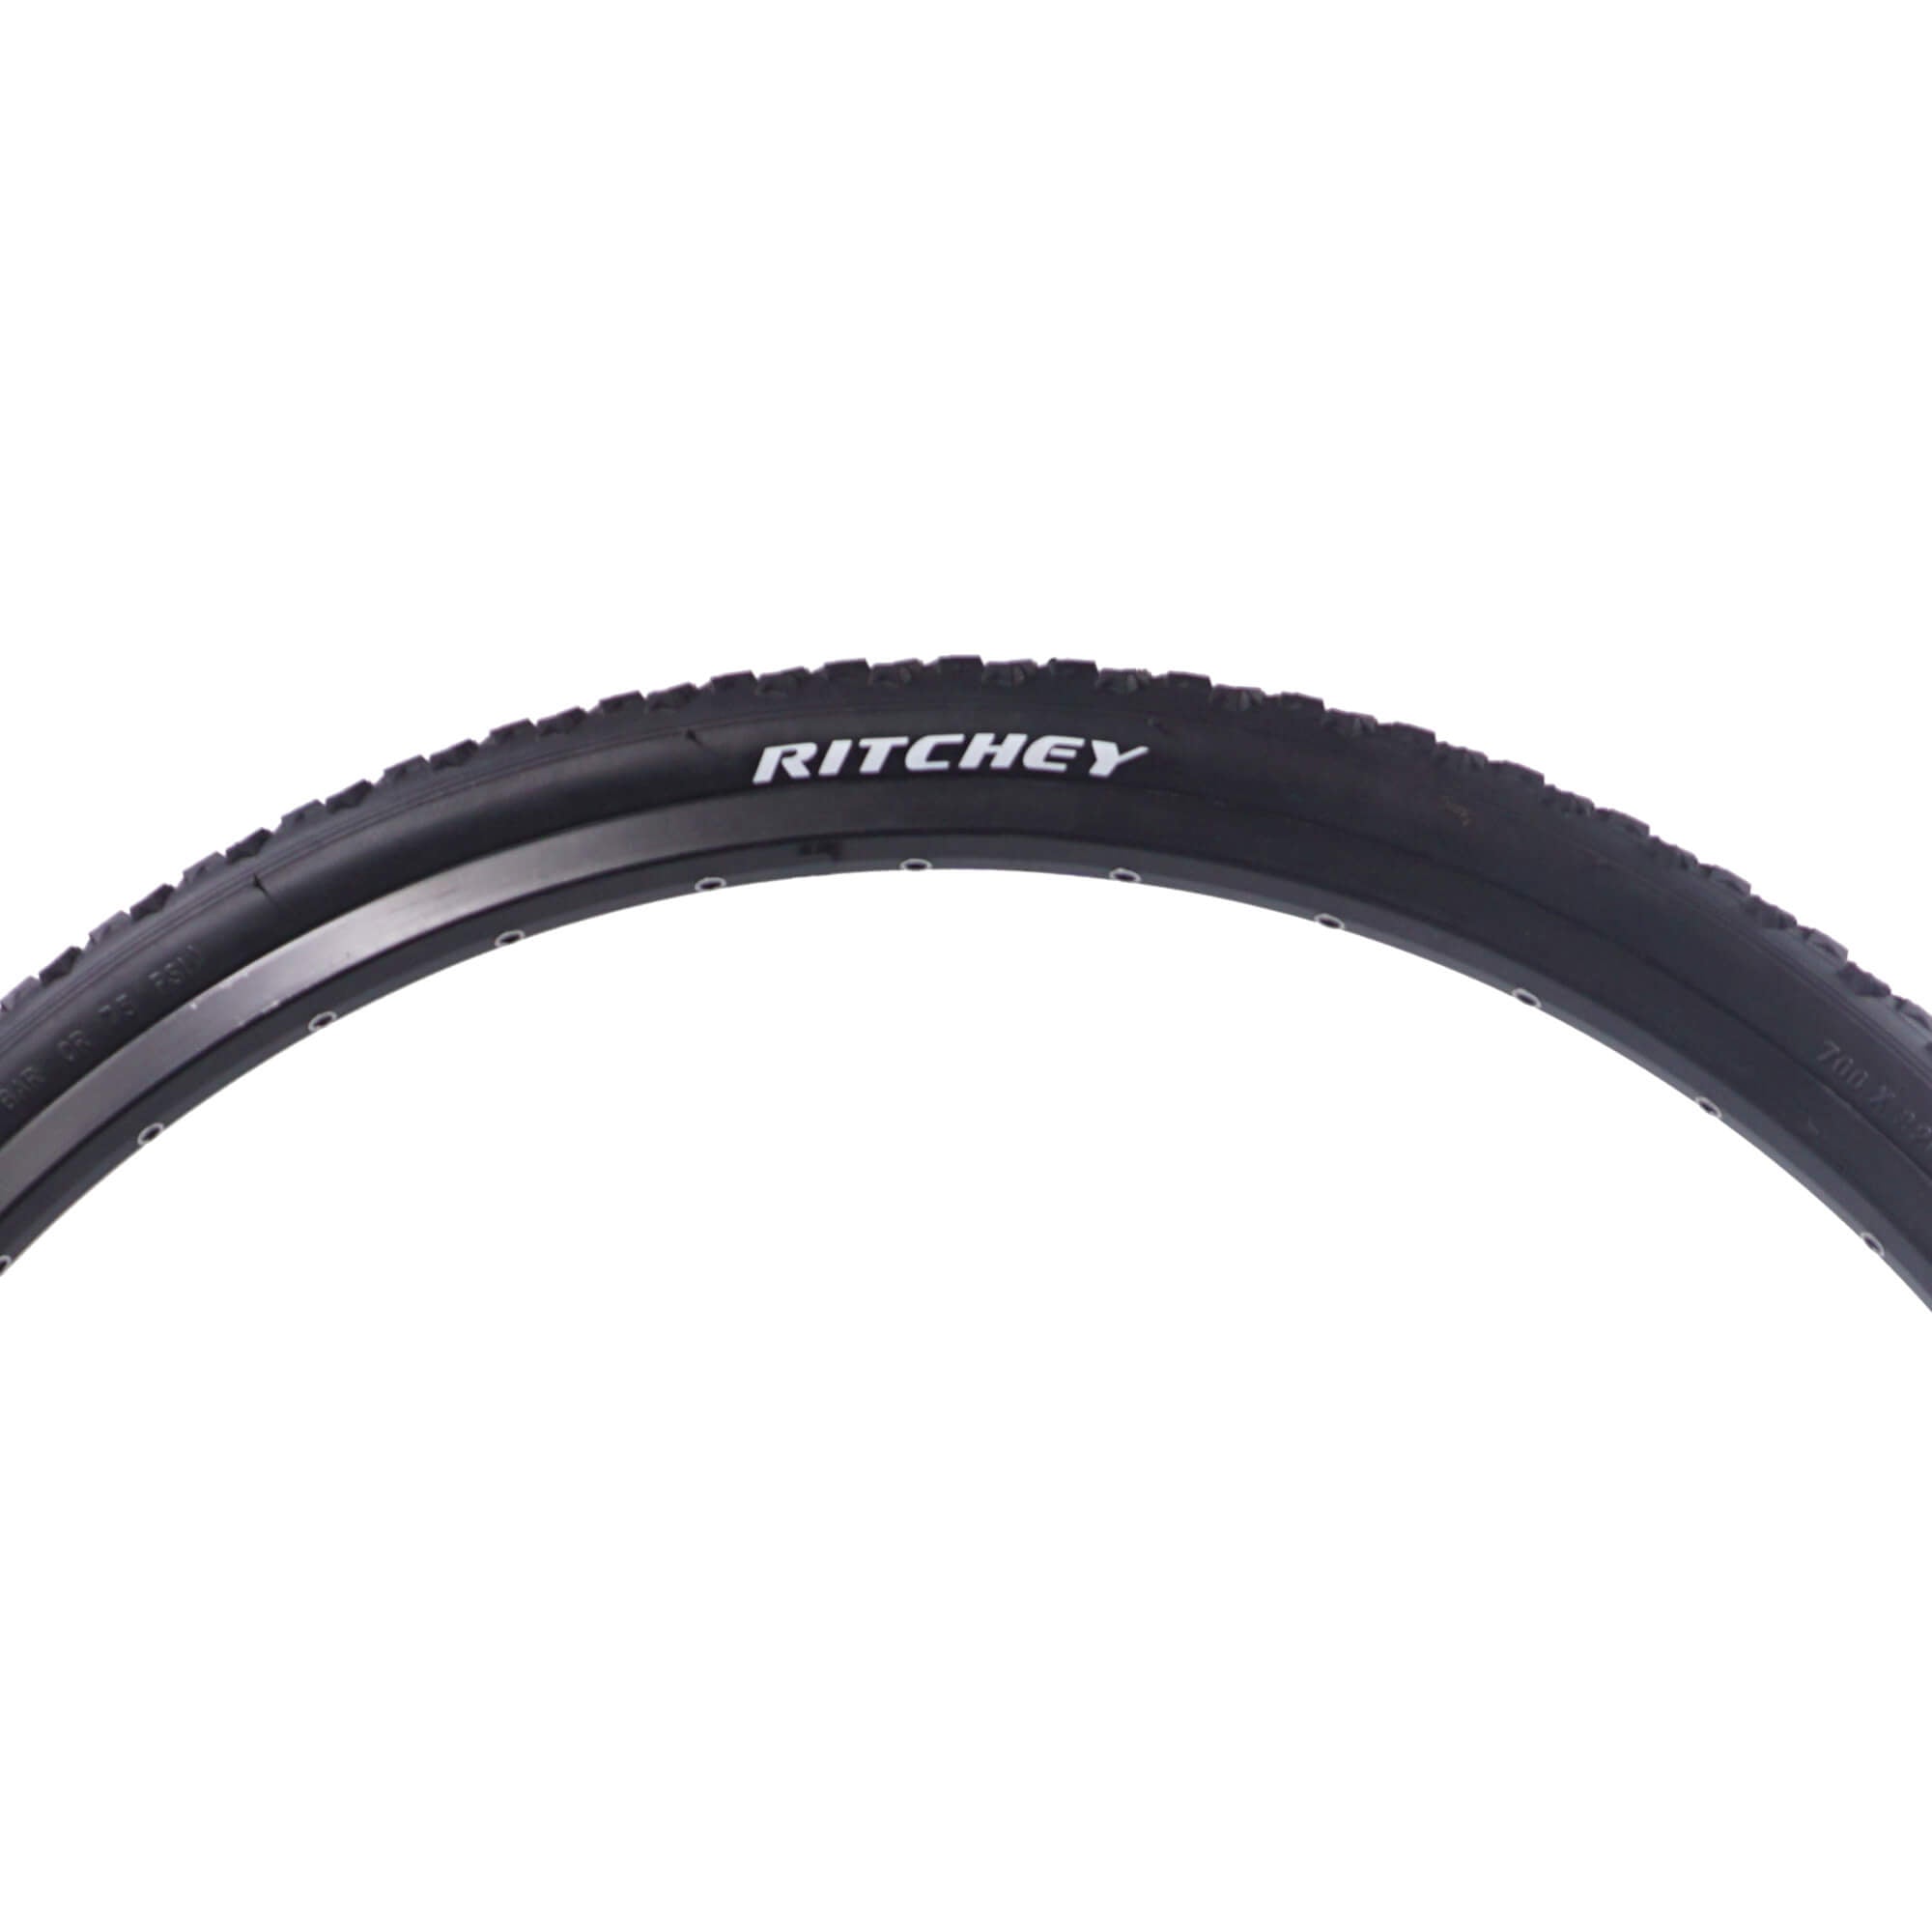 Ritchey Speedmax Comp Cross Tire 700c - The Bikesmiths